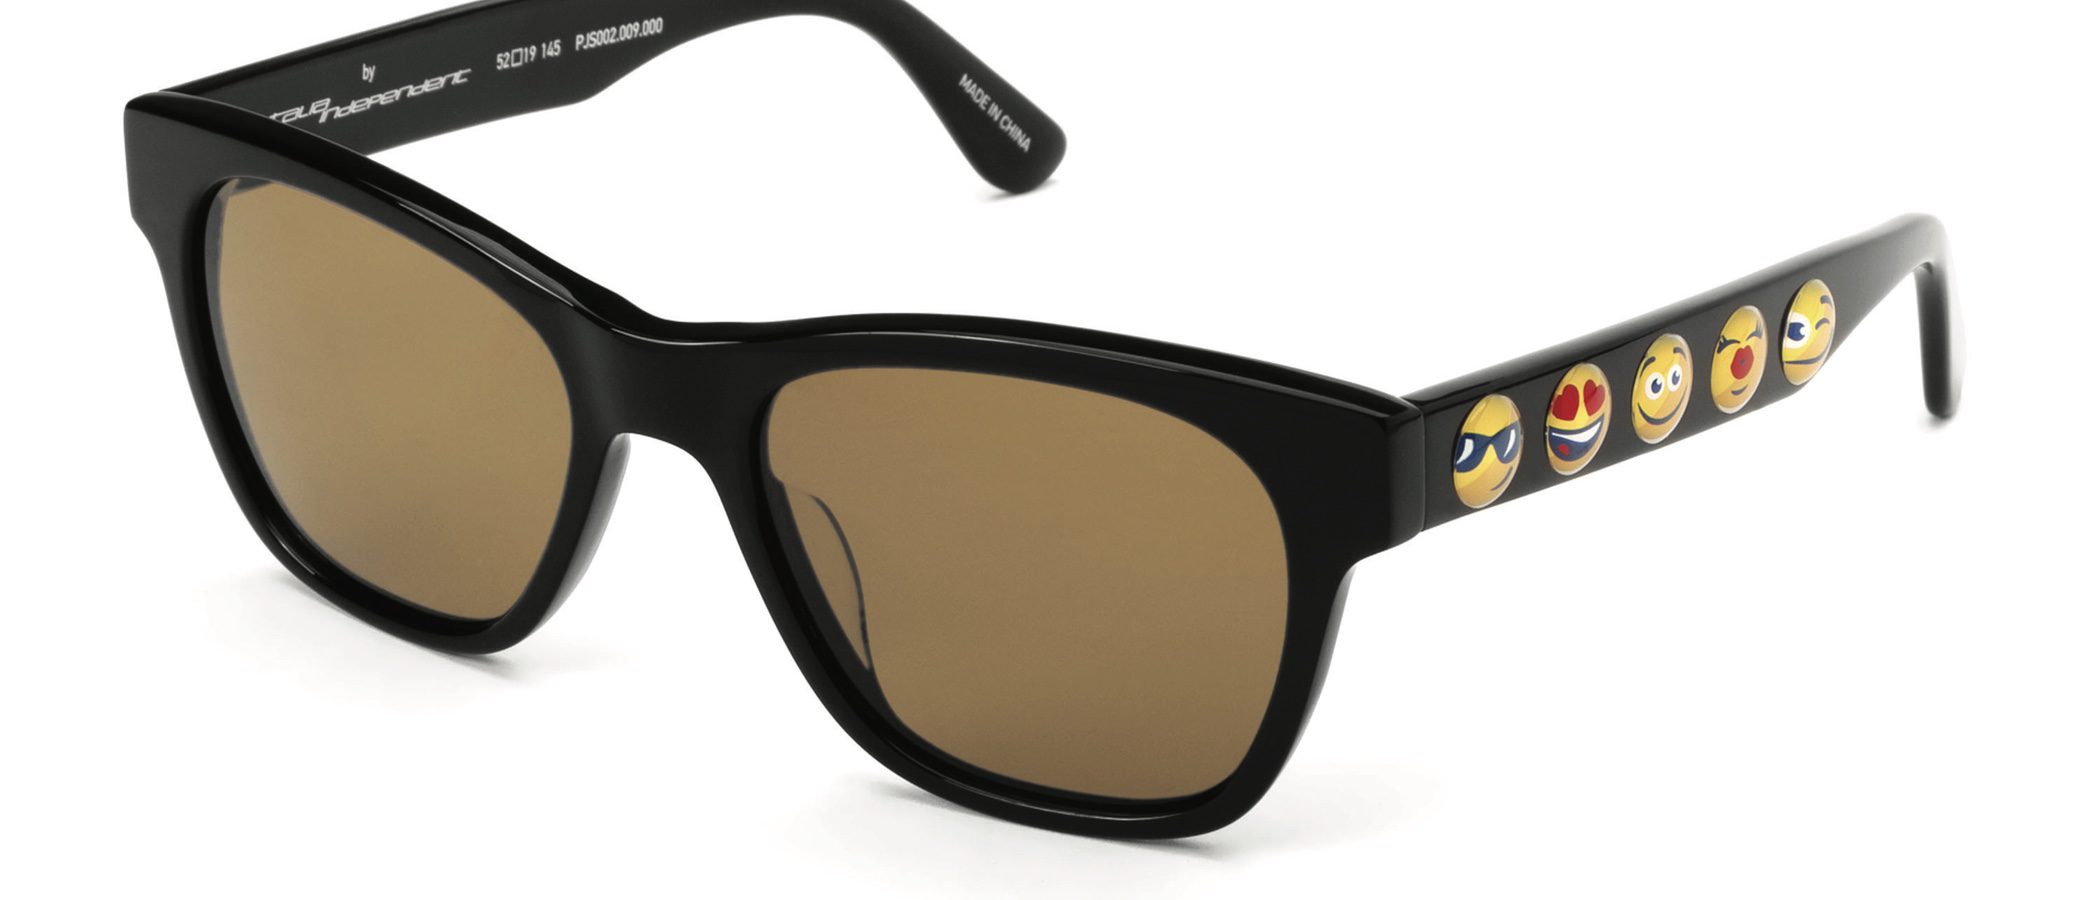 El diseñador Jeremy Scott crea una línea de gafas de sol exclusiva para Italia Independent